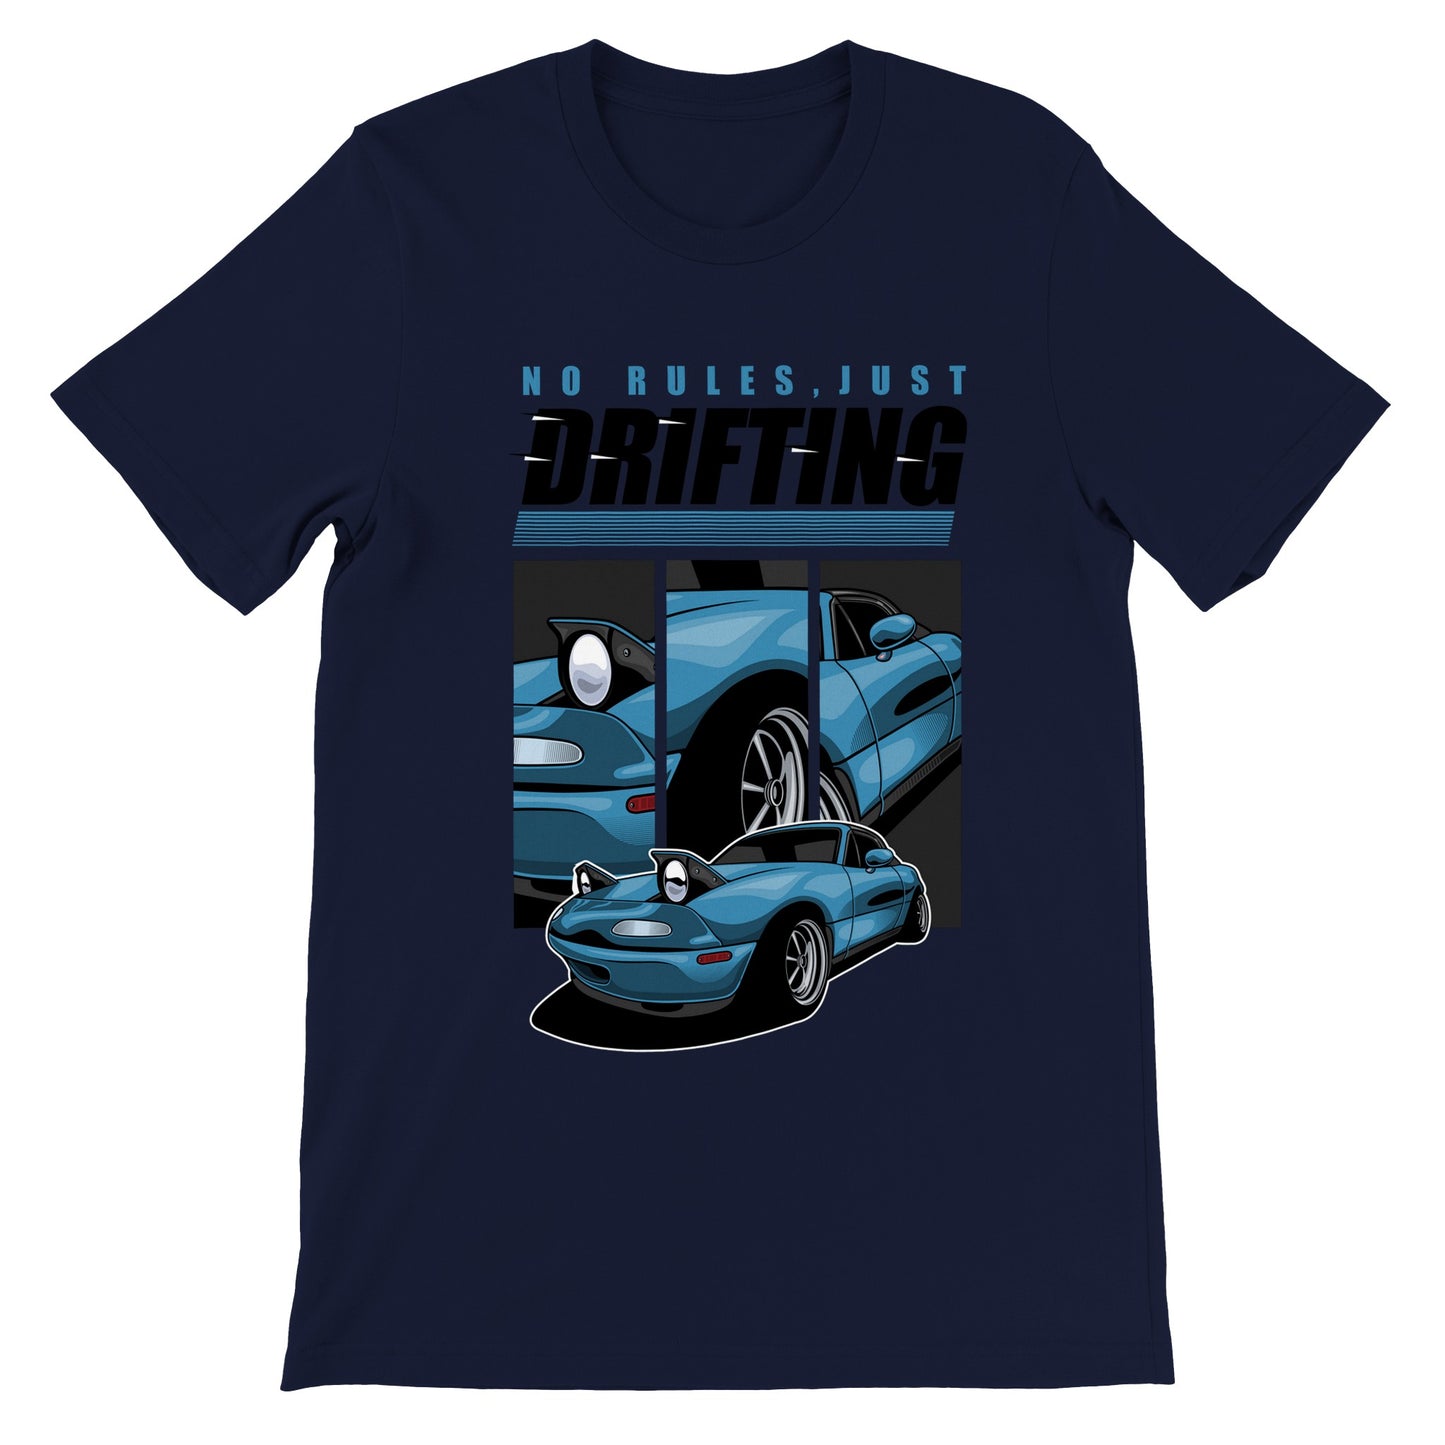 Car T-shirt - Retro Drifting No Rules Artwork - Premium Unisex T-shirt